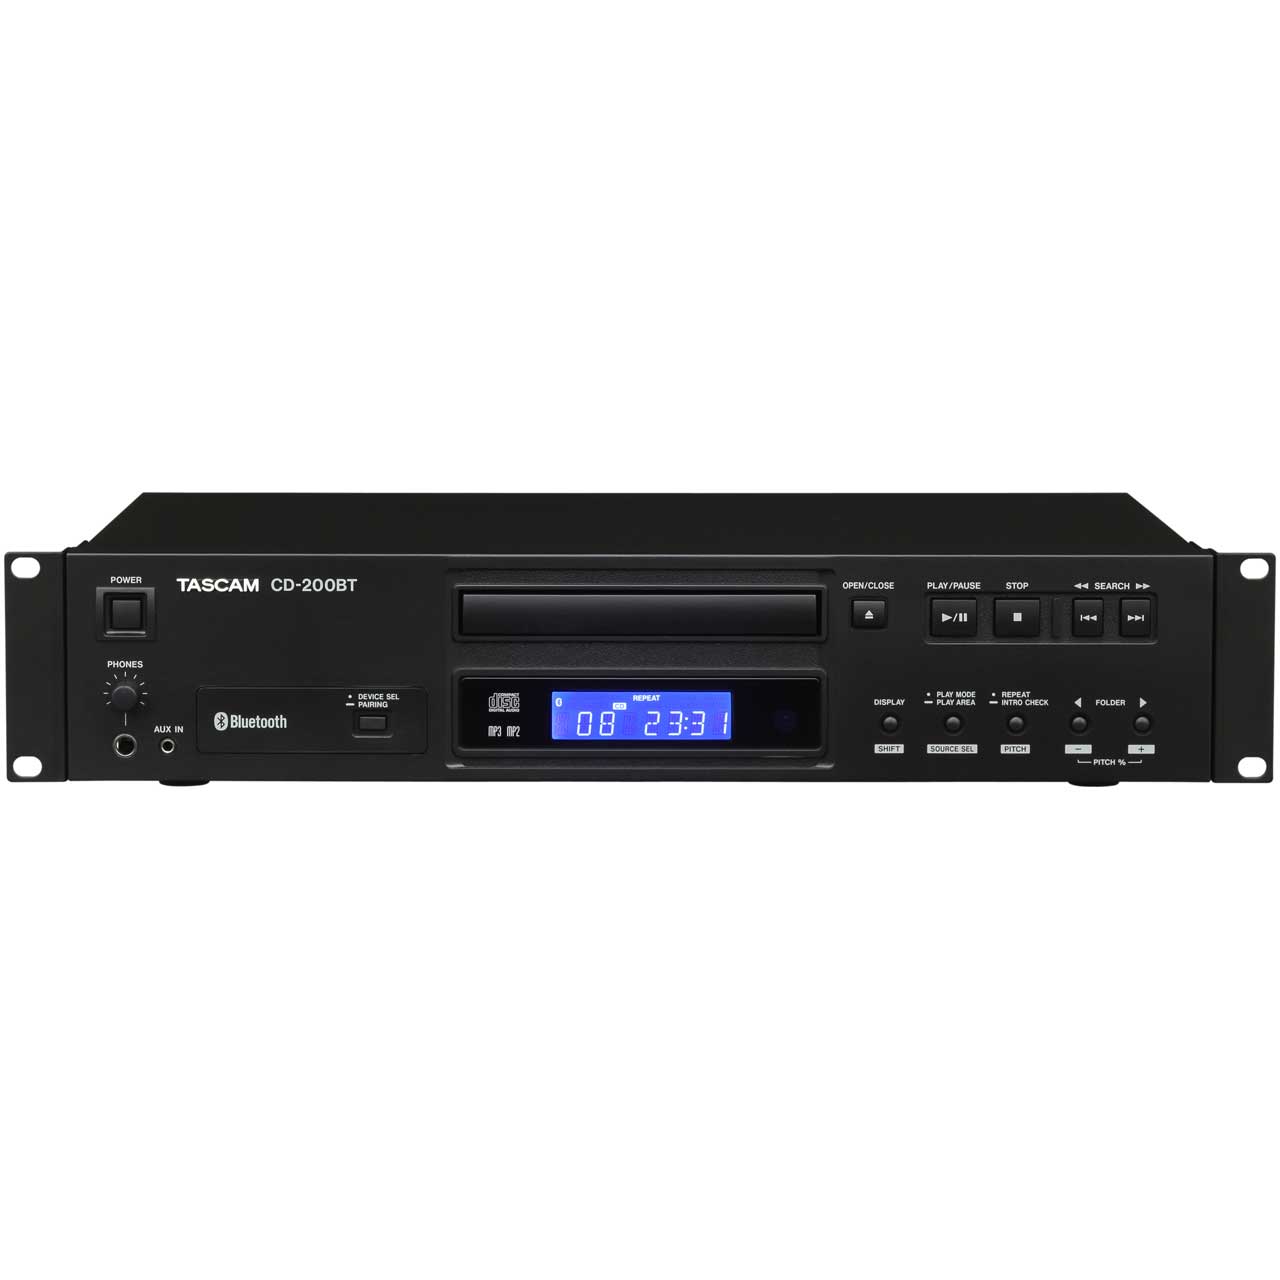 Tascam CD-200BT Professional Rack Mountable CD Player / Bluetooth Receiver